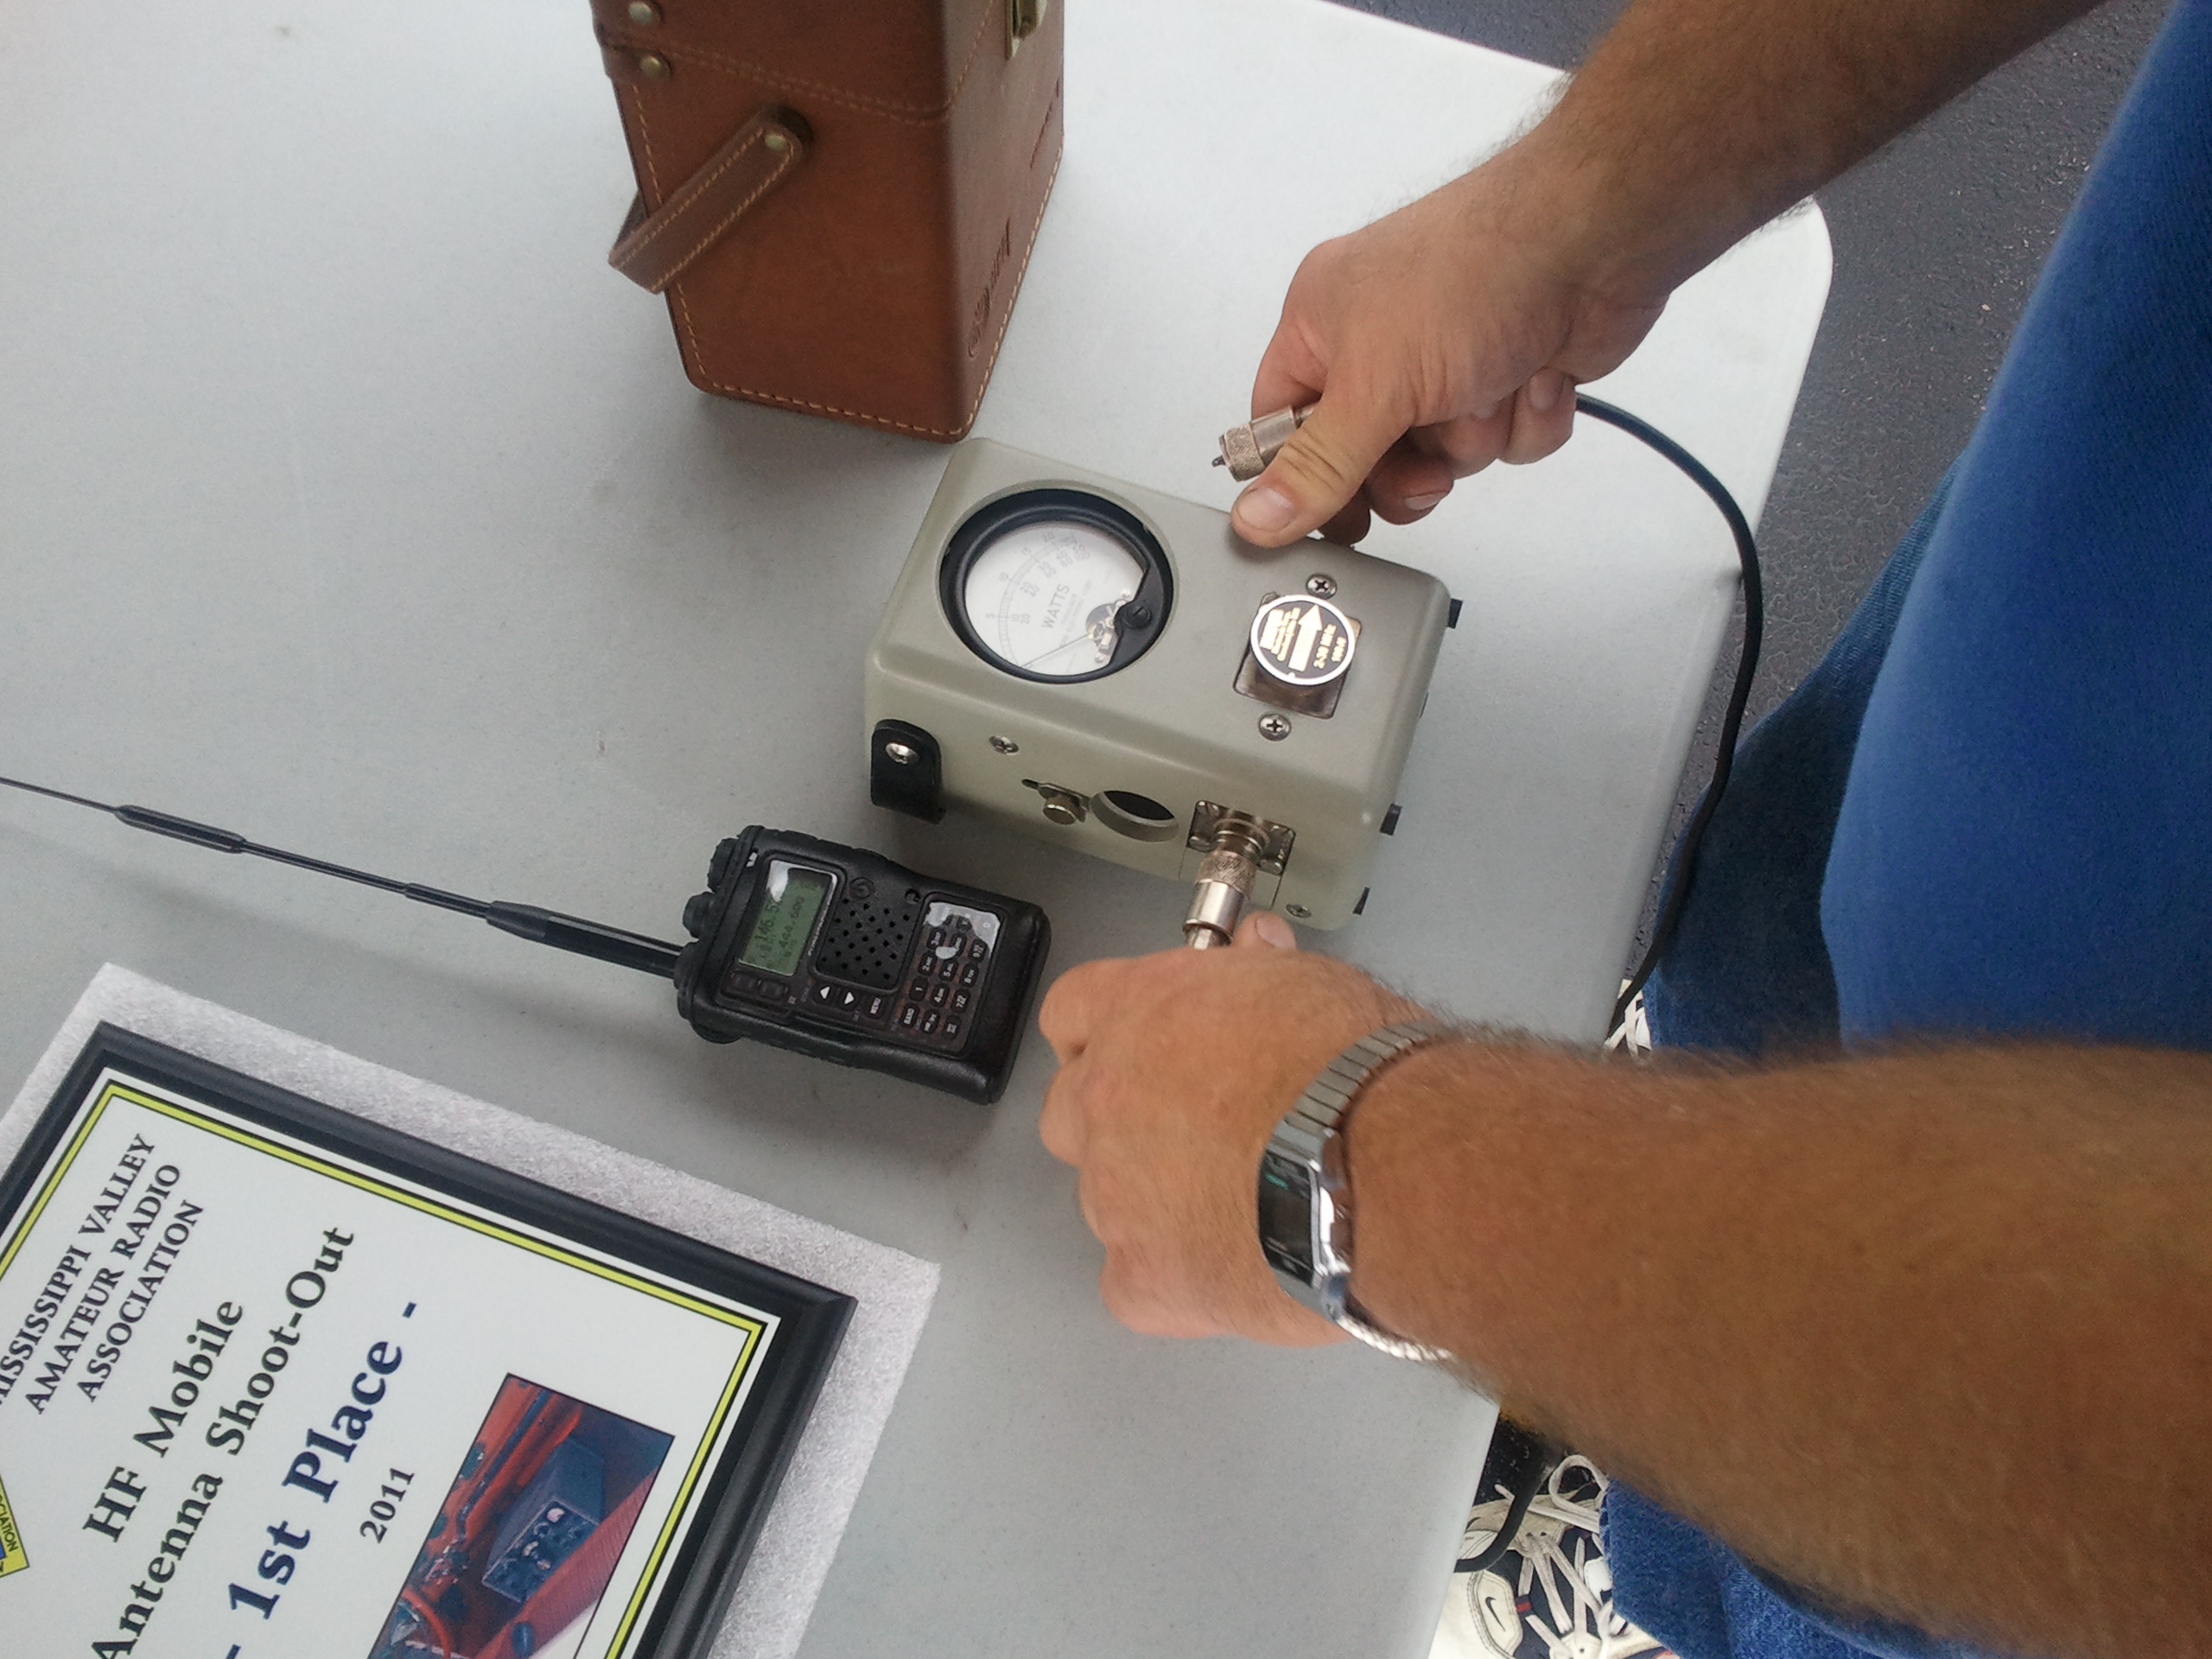 Getting the Bird watt meter ready for testing power output.